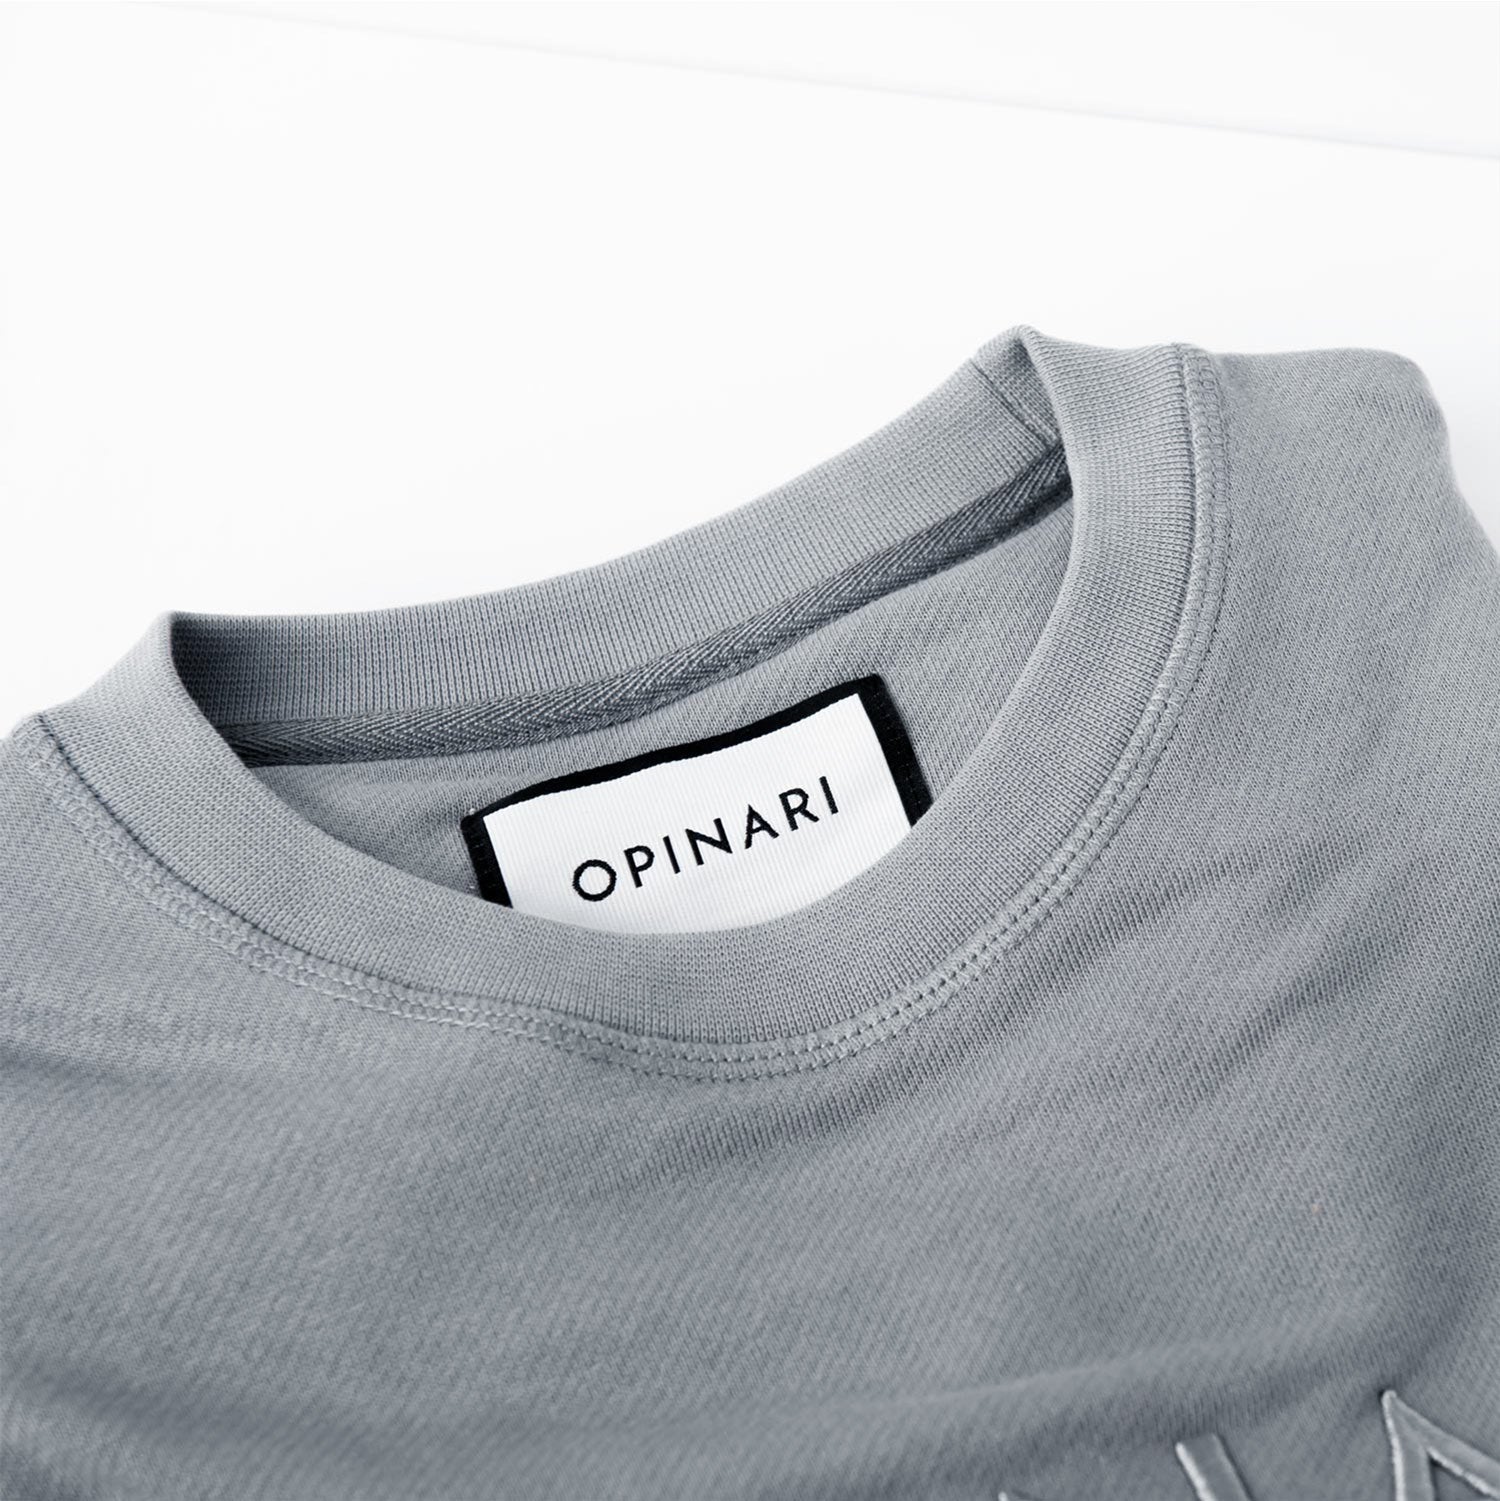 Classic sweat grey on grey - Opinari - Driver's Essentials